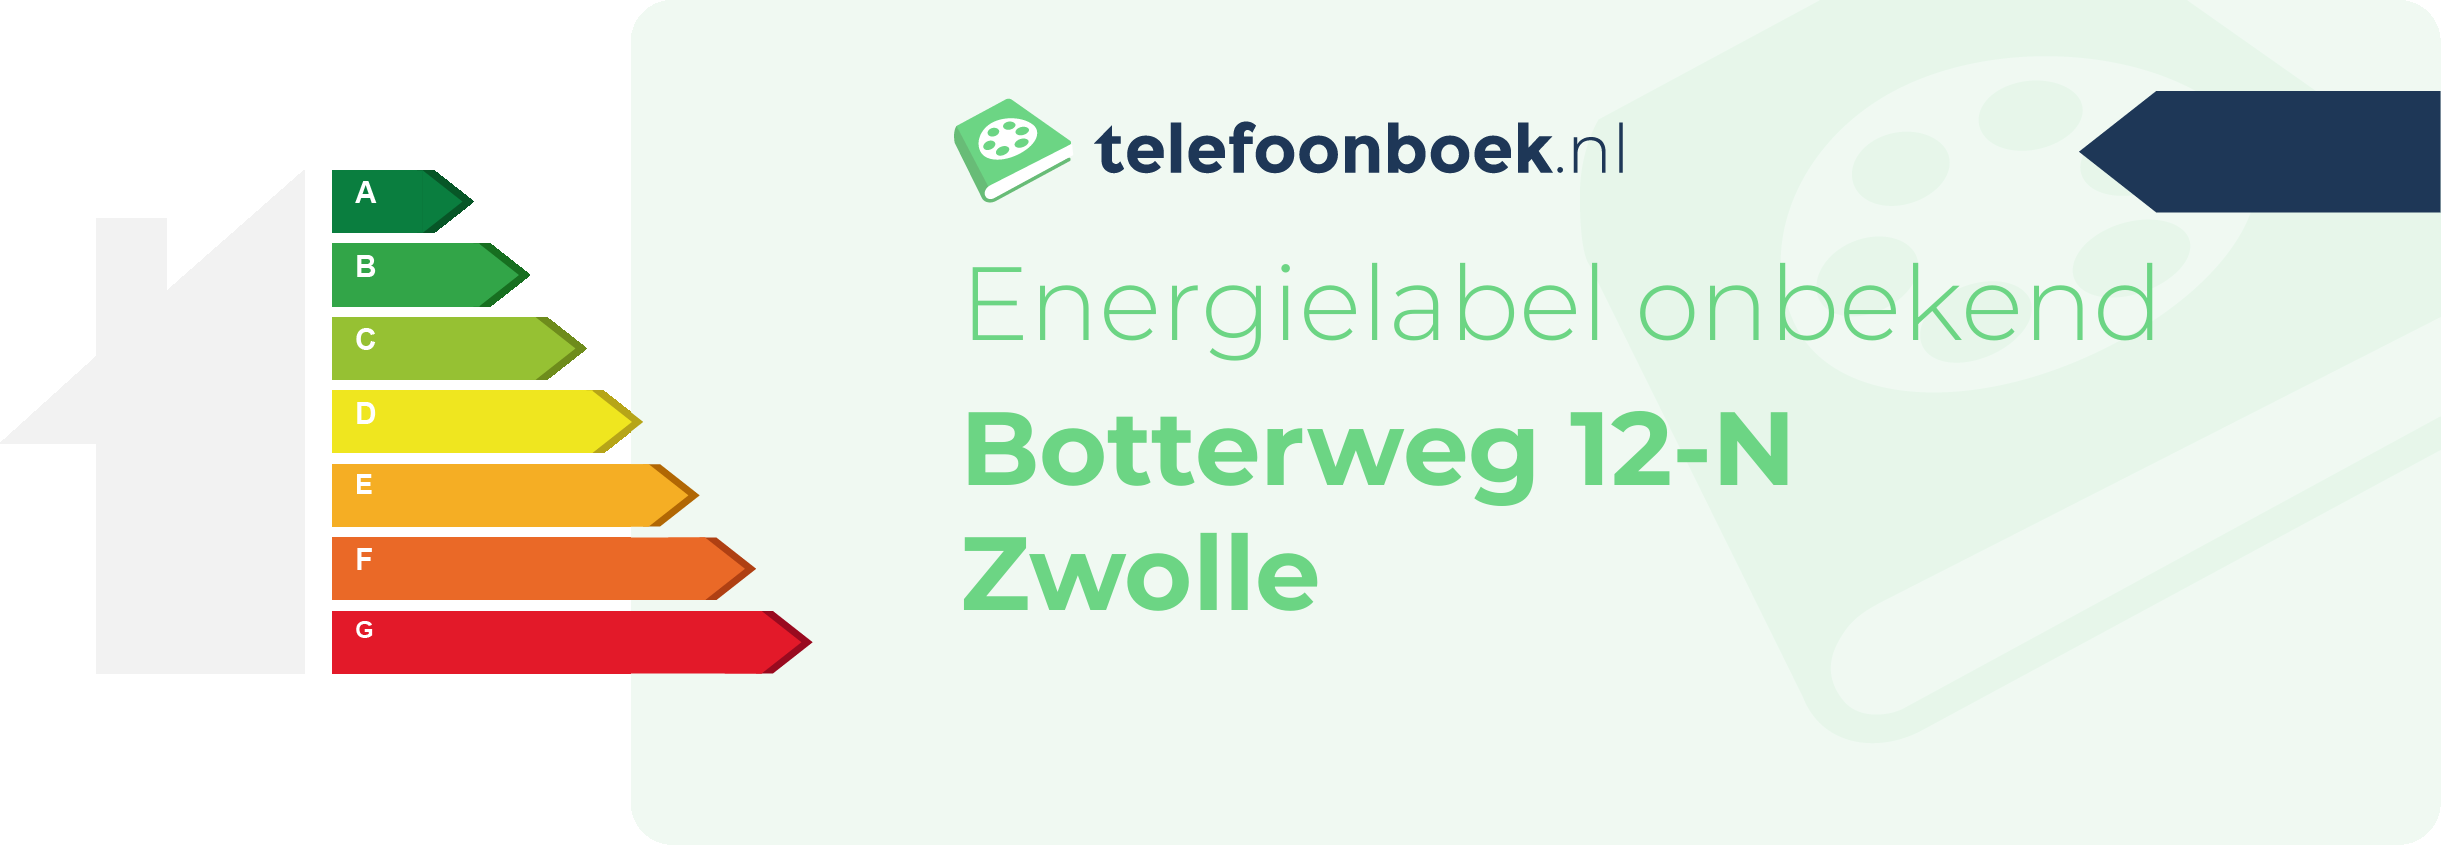 Energielabel Botterweg 12-N Zwolle